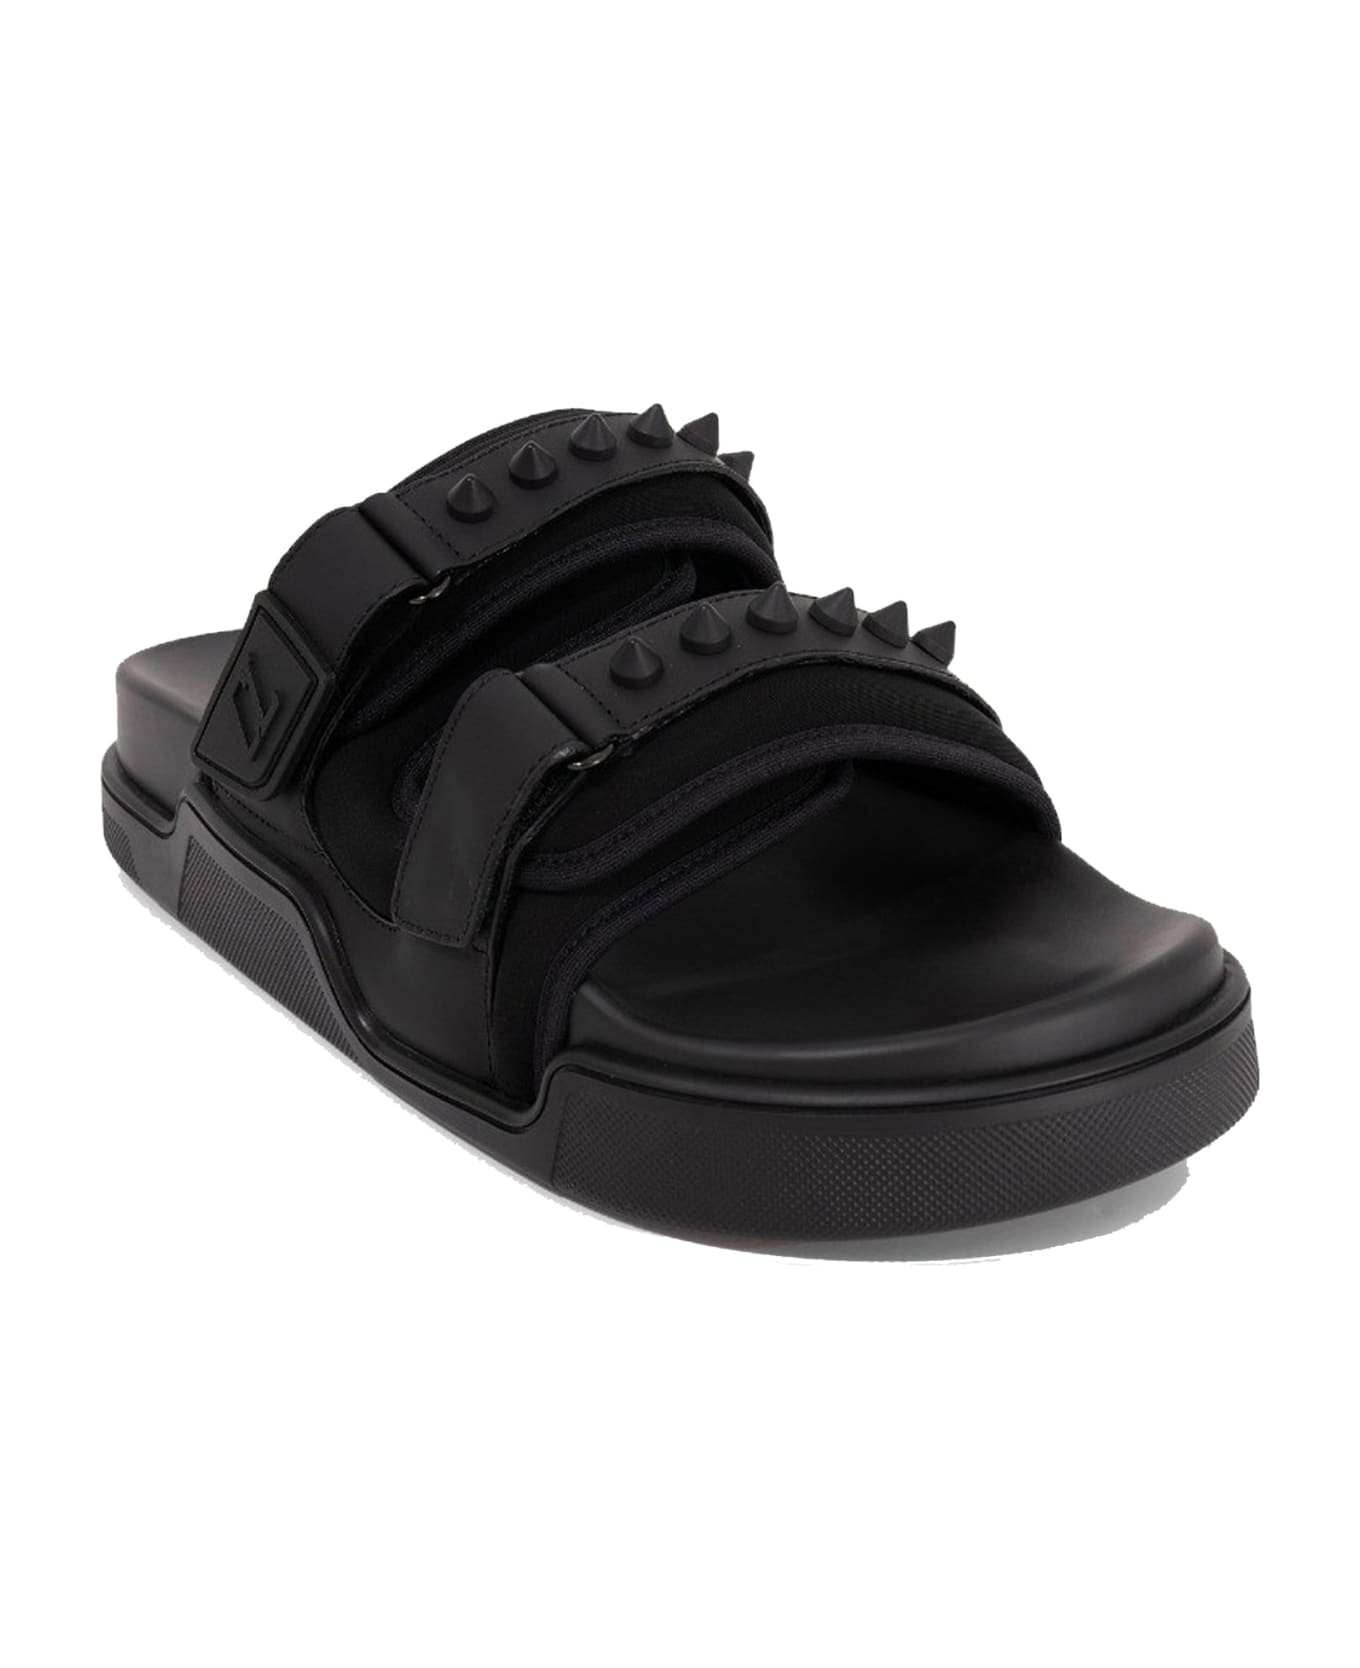 Christian Louboutin Leather Velcro Sandals - Black